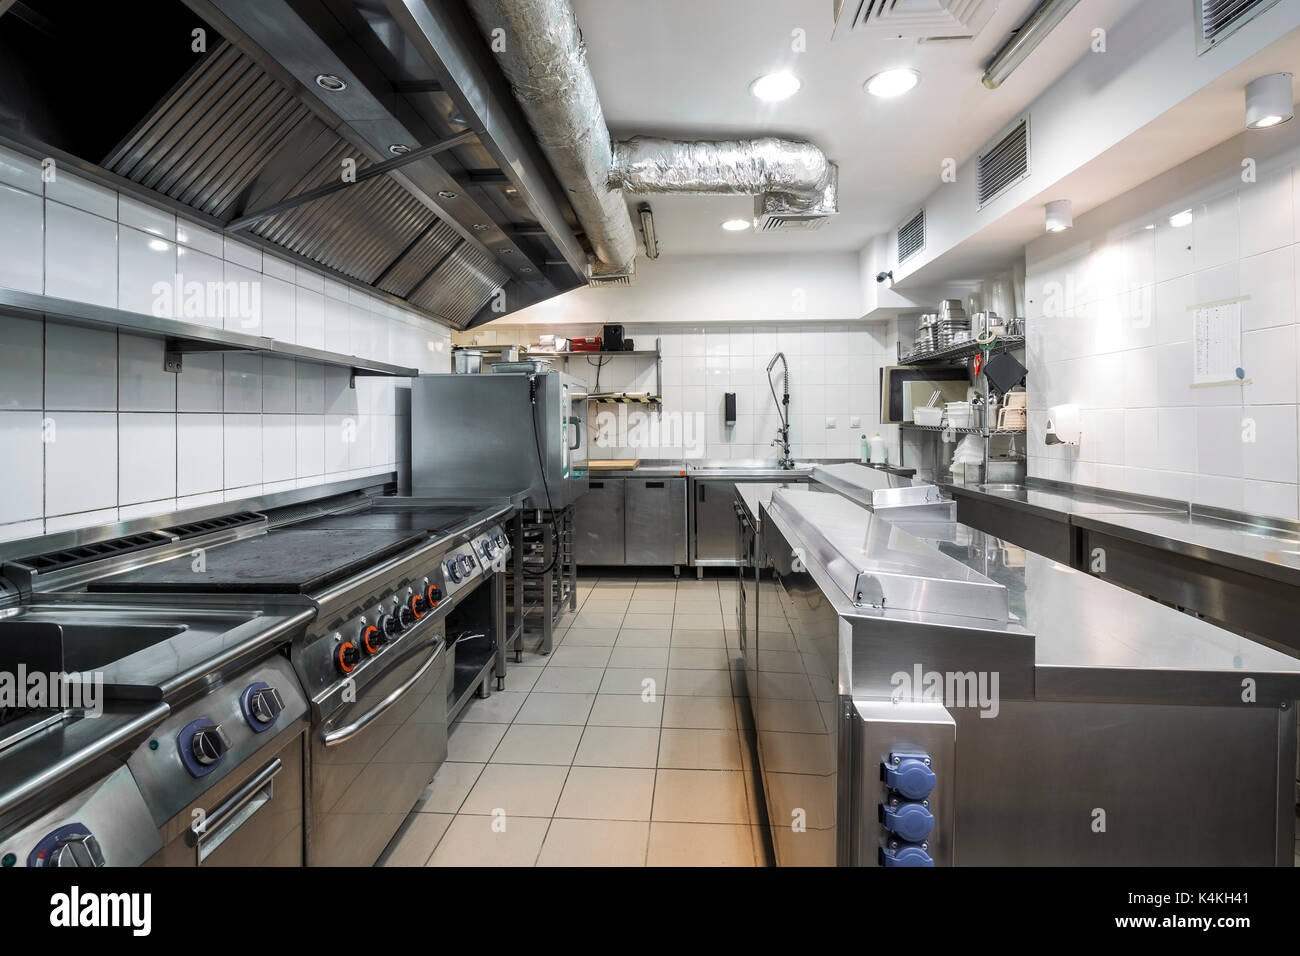 https://c8.alamy.com/comp/K4KH41/commercial-kitchen-in-a-restaurant-with-stainless-equipment-K4KH41.jpg